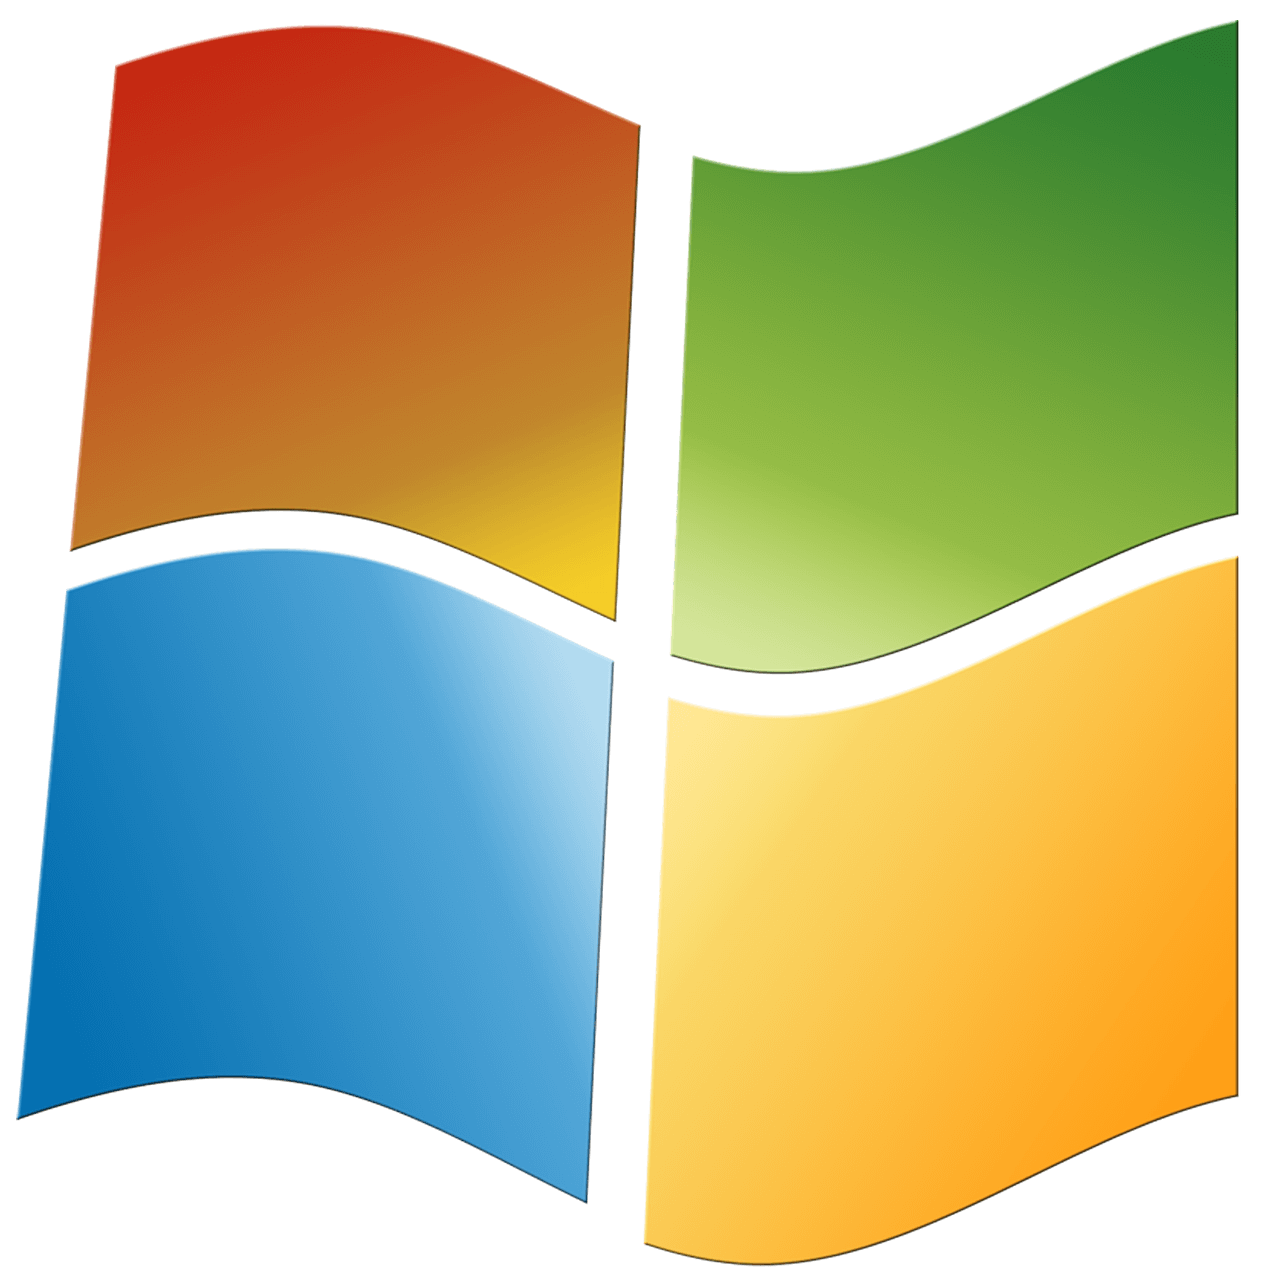 Windows 7 supports Edge